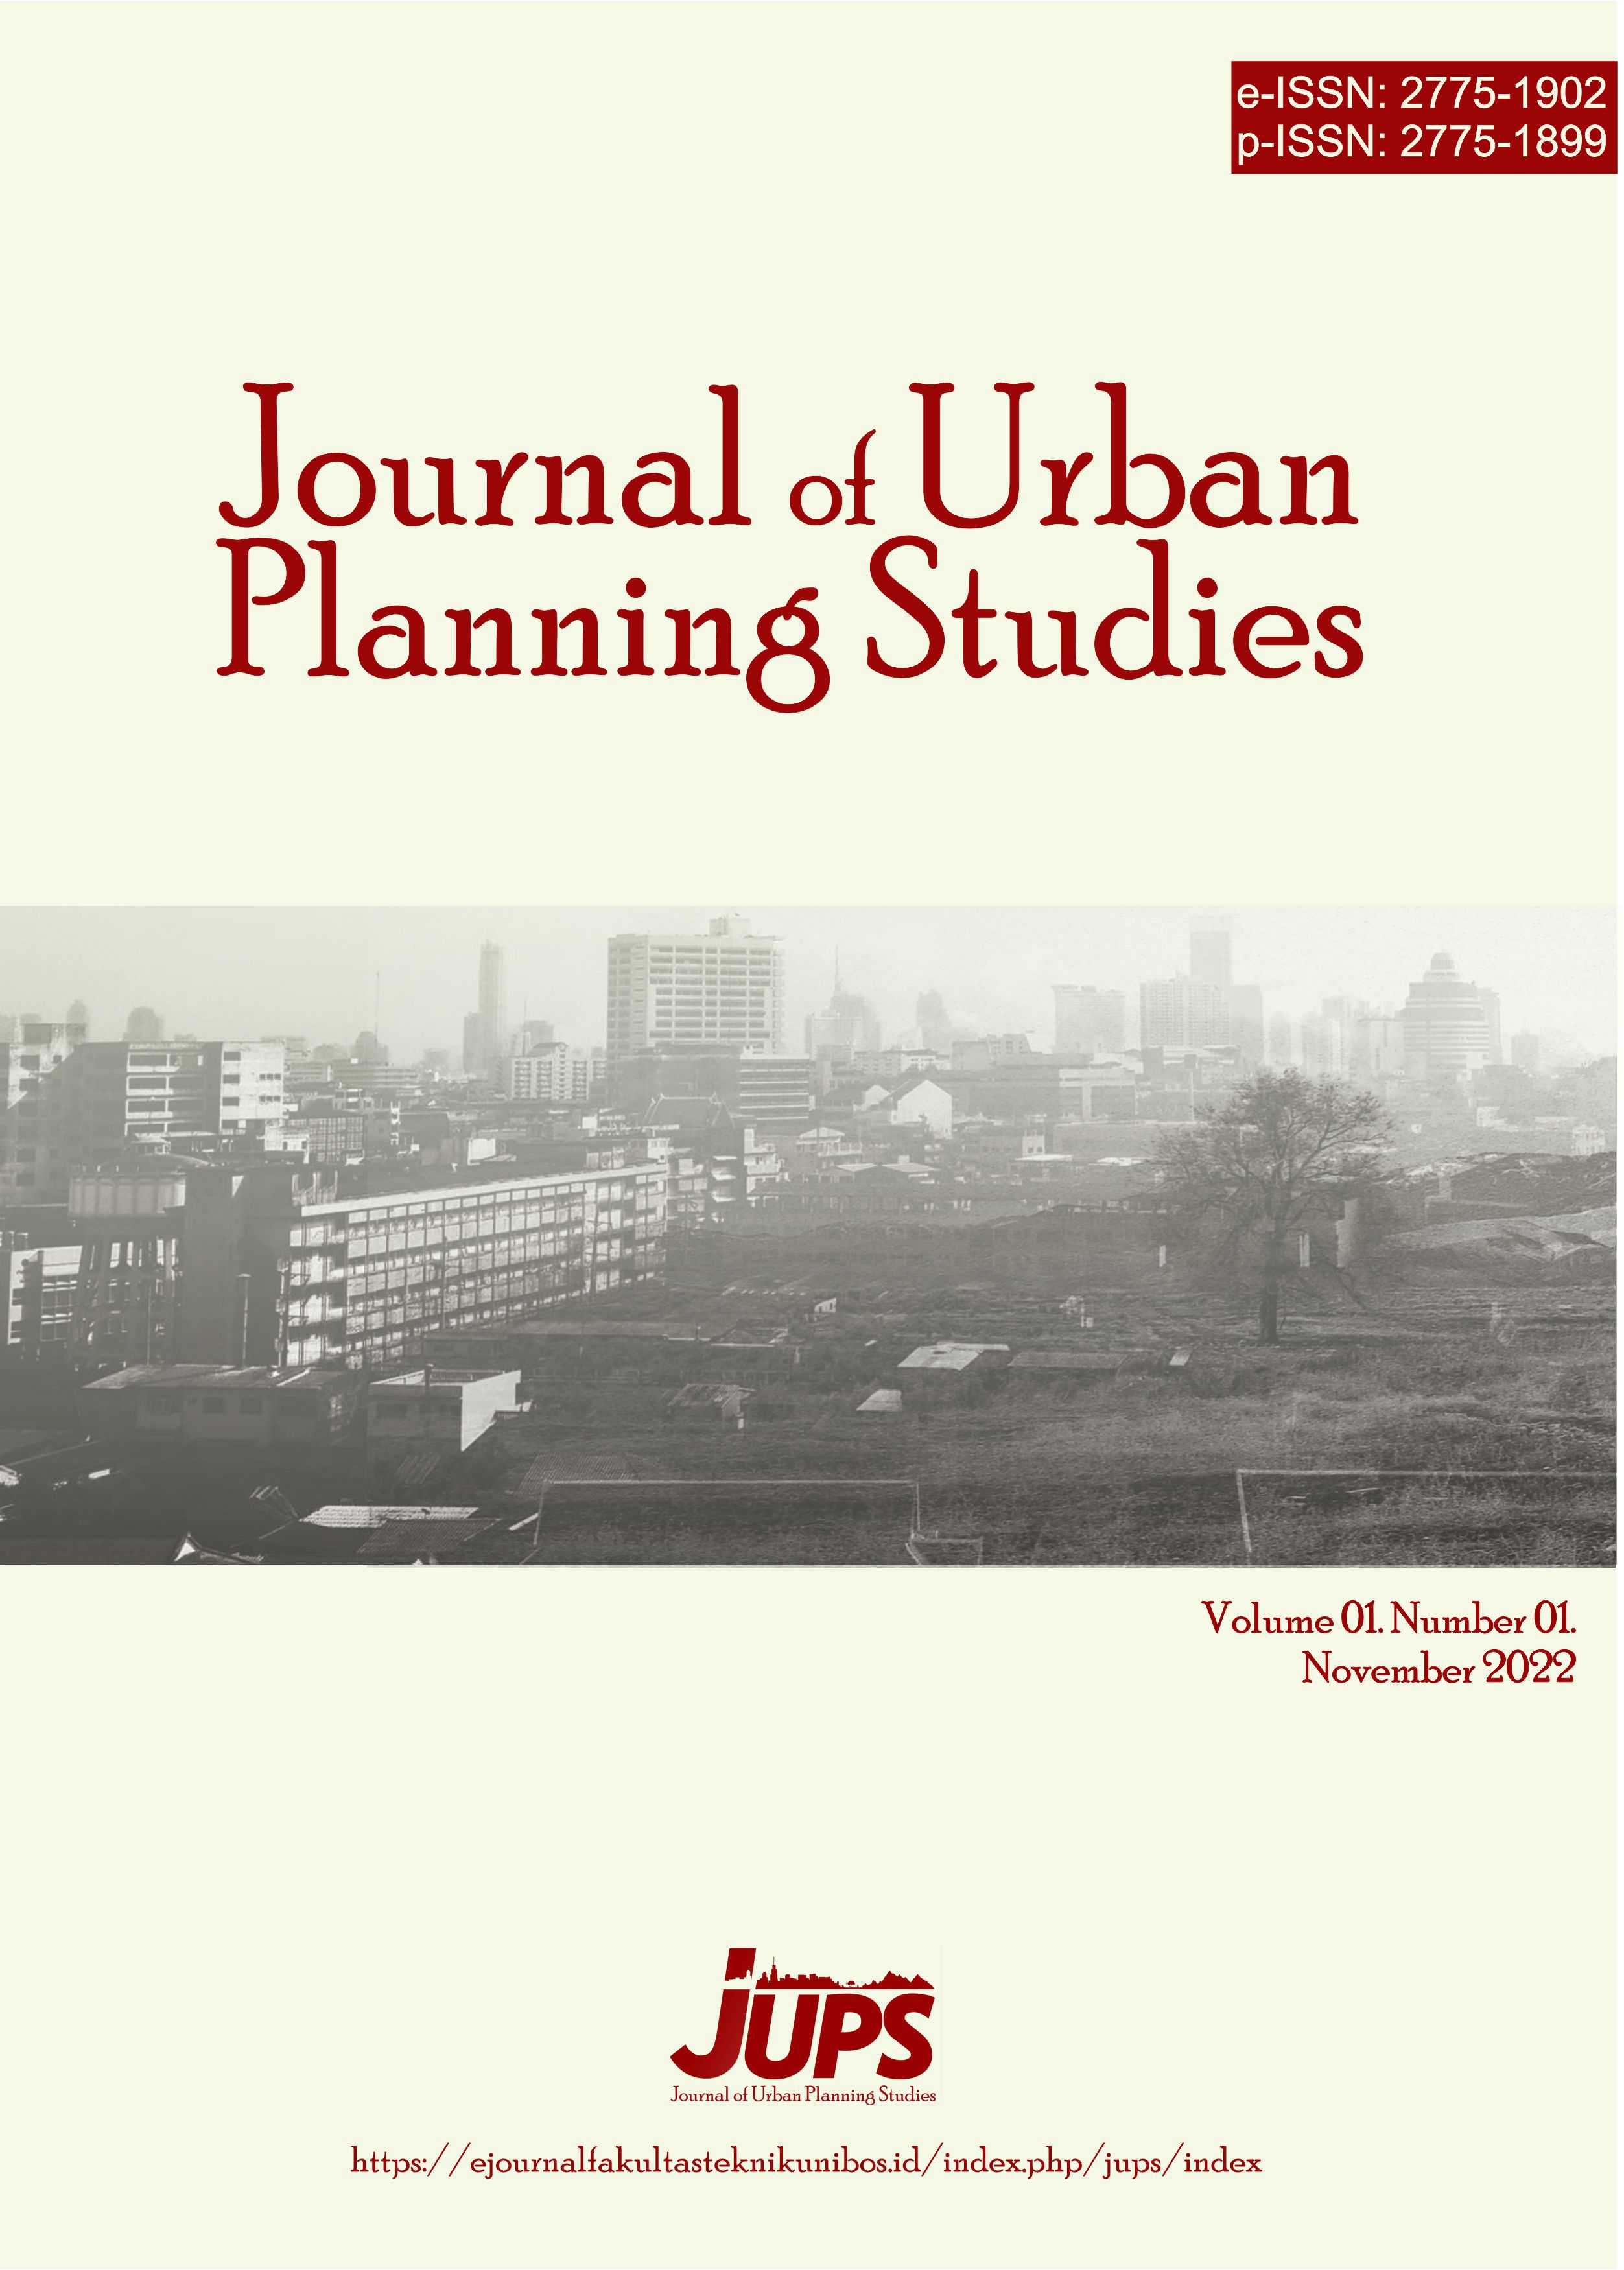 					Lihat Vol 3 No 1 (2022): Journal of Urban Planning Studies, November 2022
				